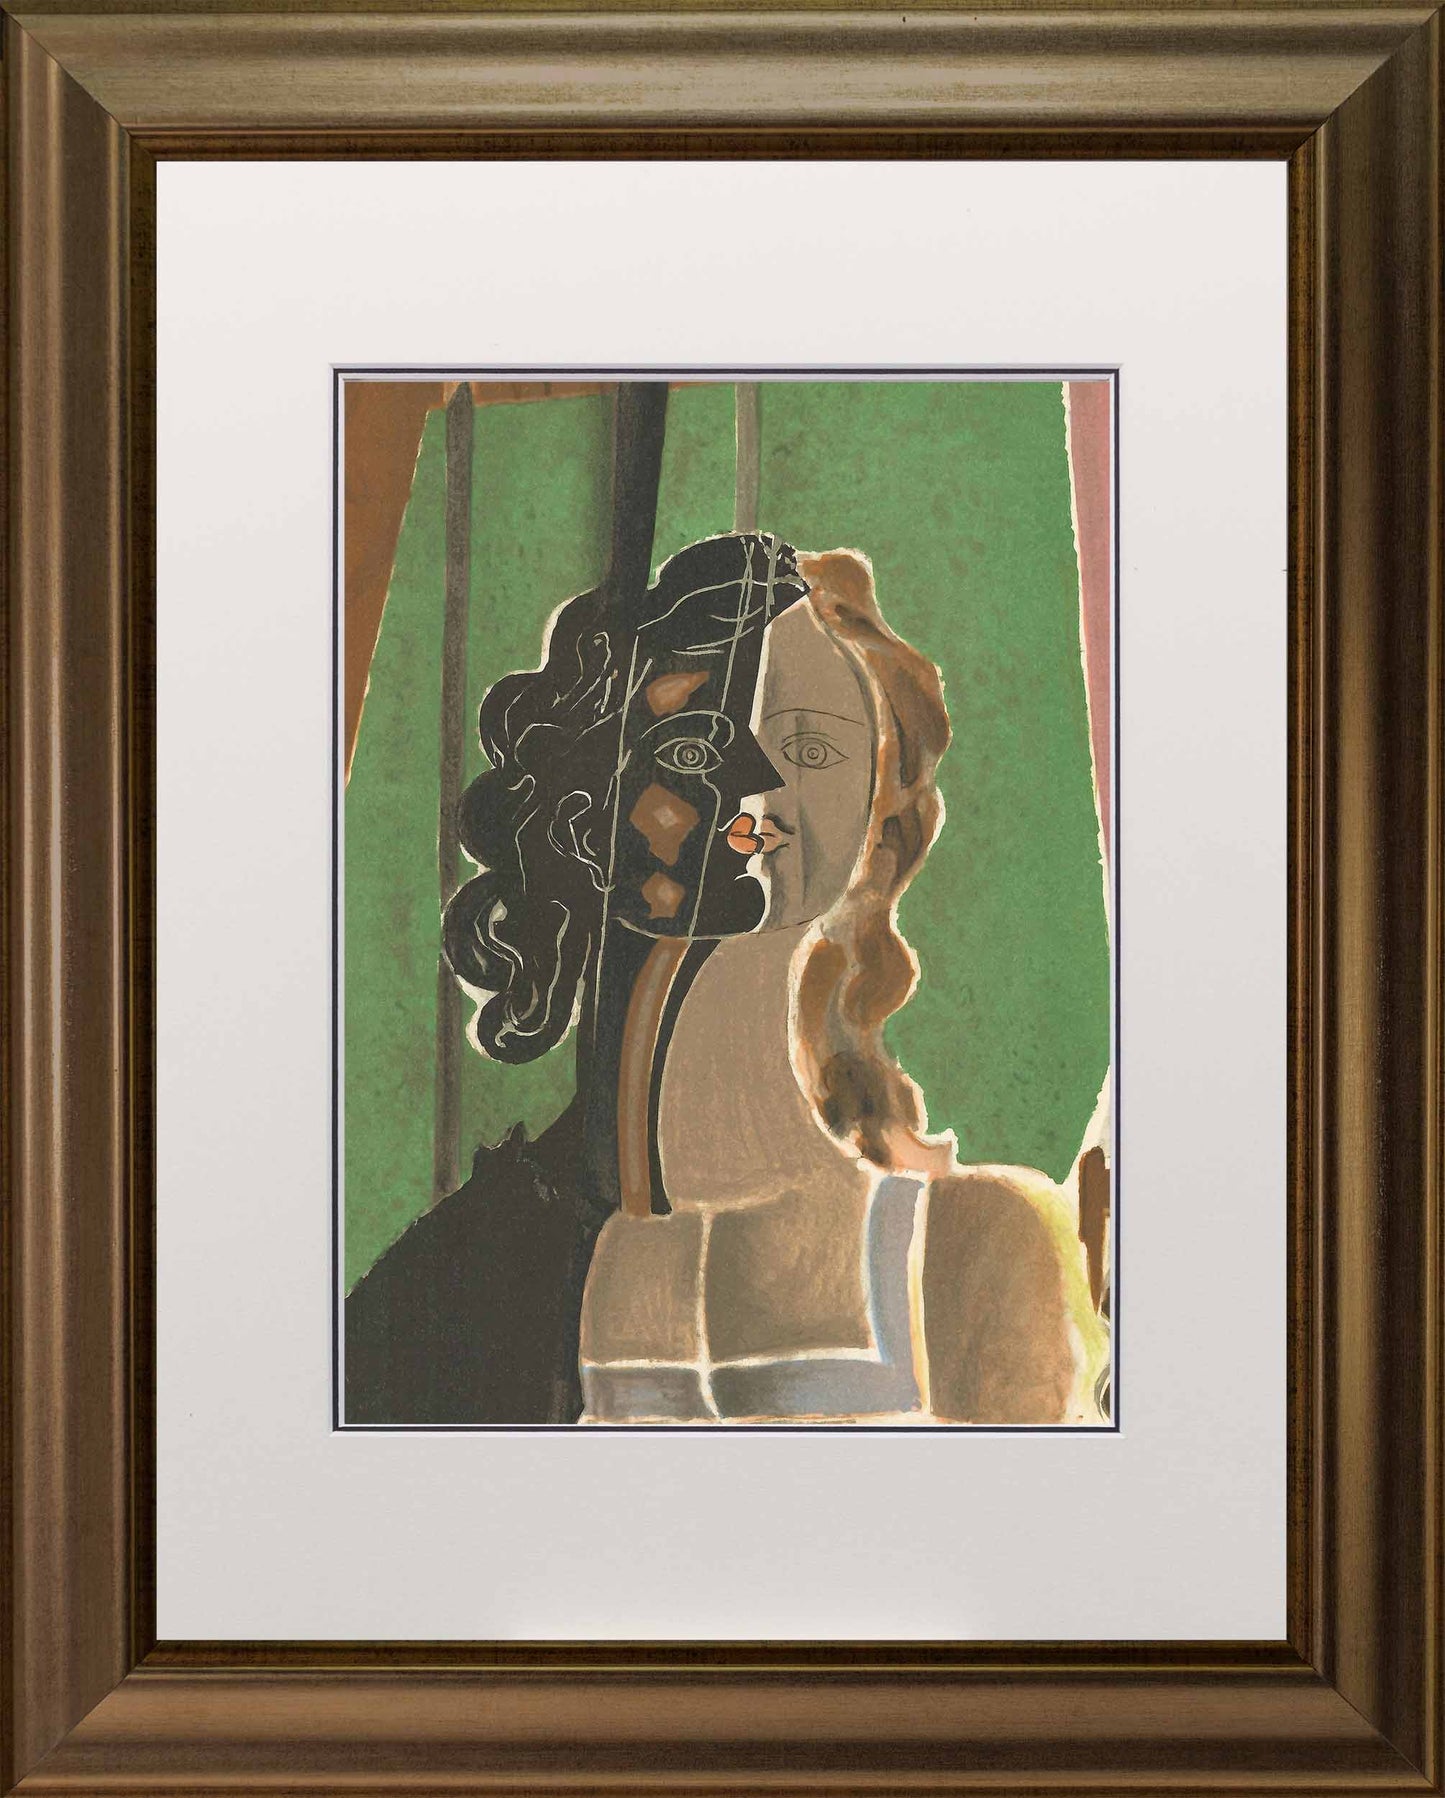 Georges Braque, "Figure"